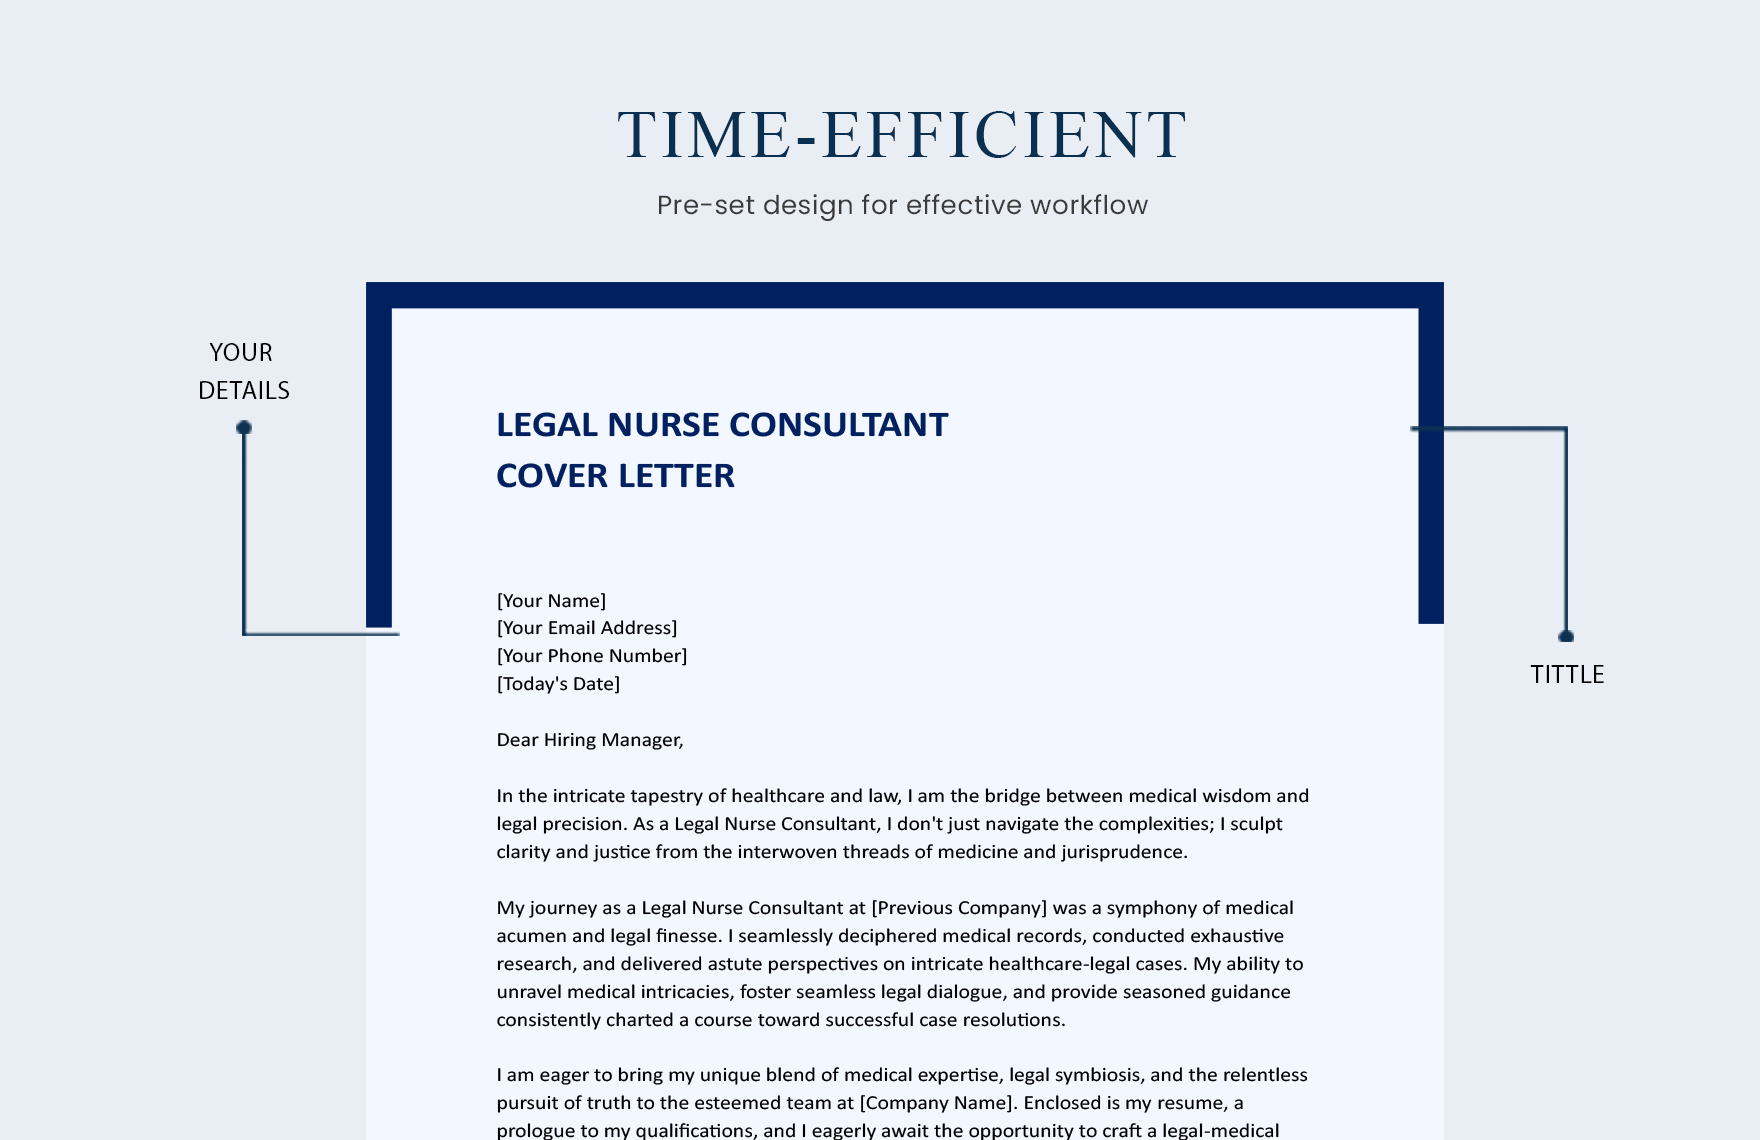 Legal Nurse Consultant Cover Letter